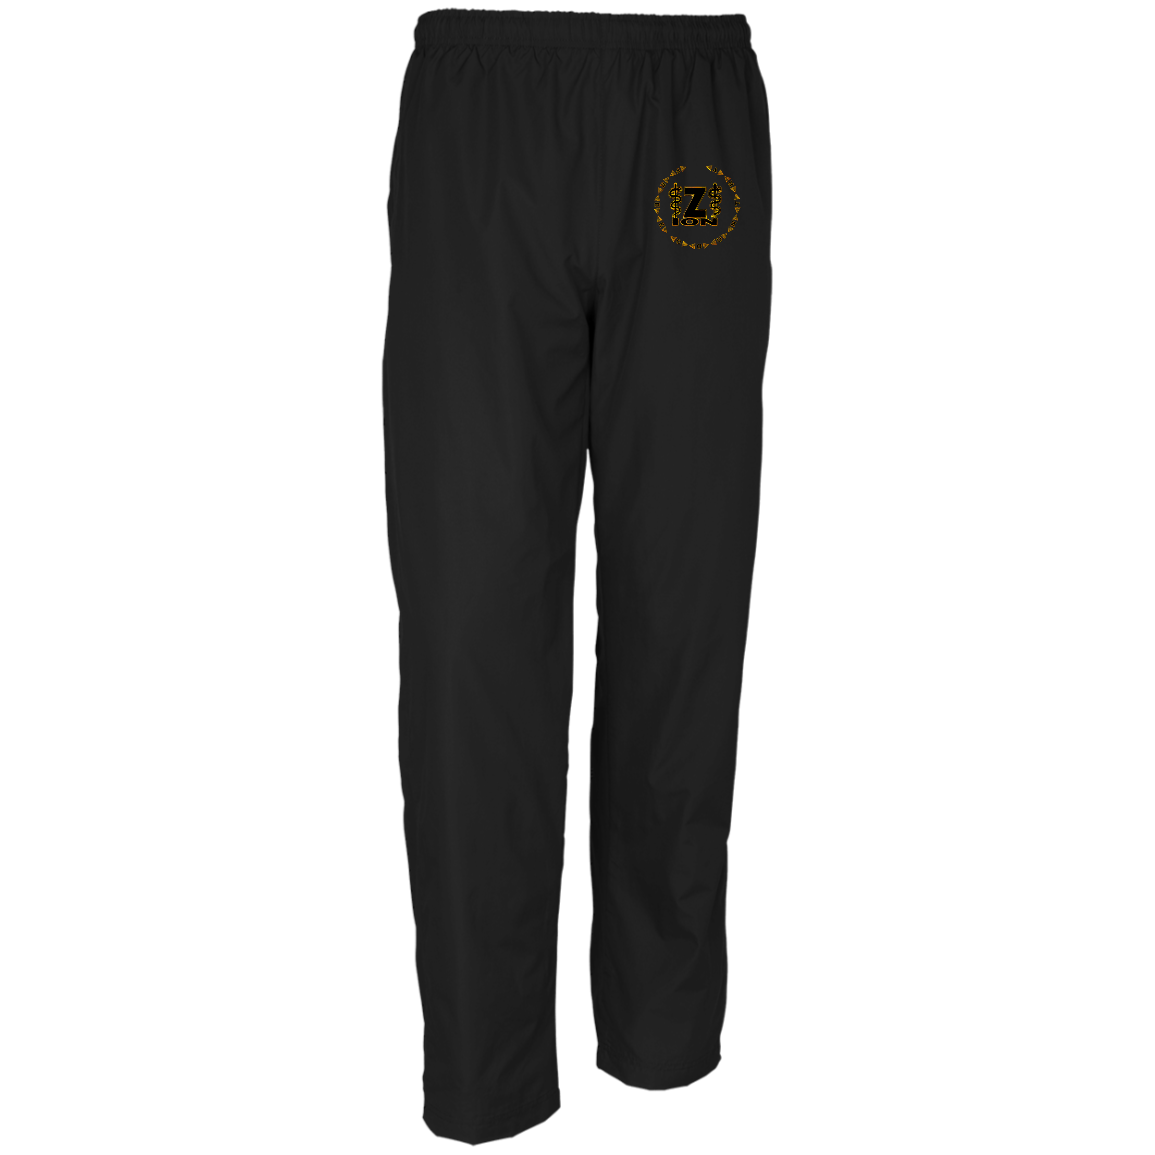 Zion - United States - Free Country Men's Designer Wind Pants (Black/Navy)